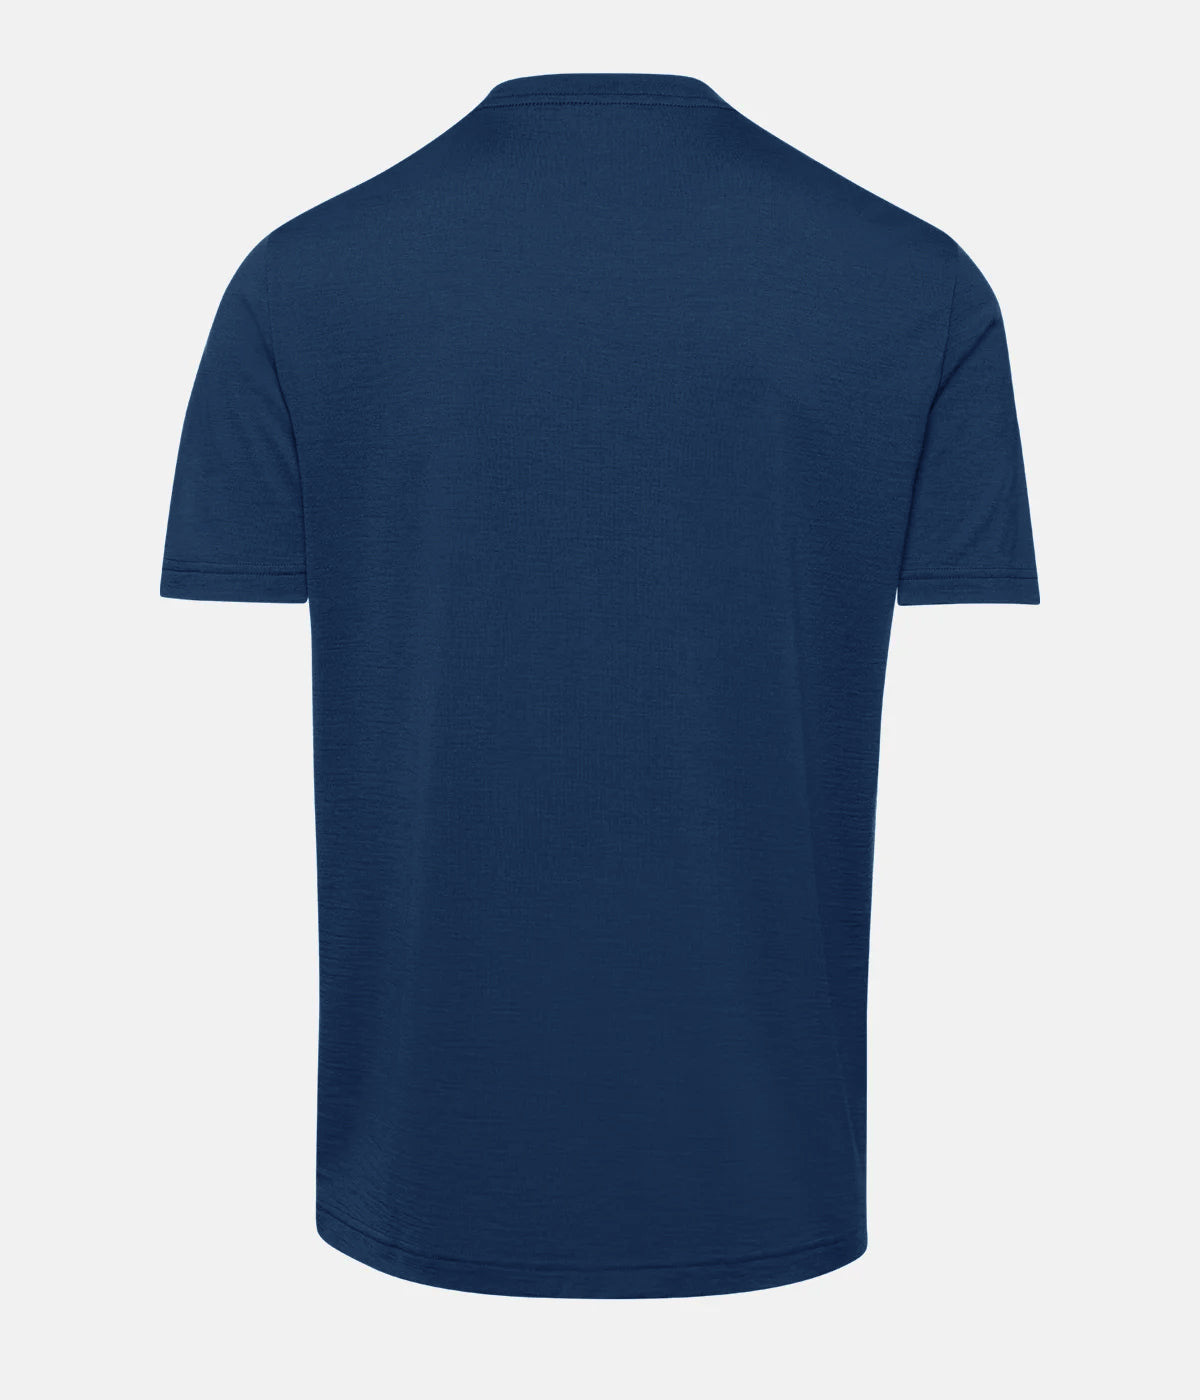 Blue Men's Merino Life SS Shirt